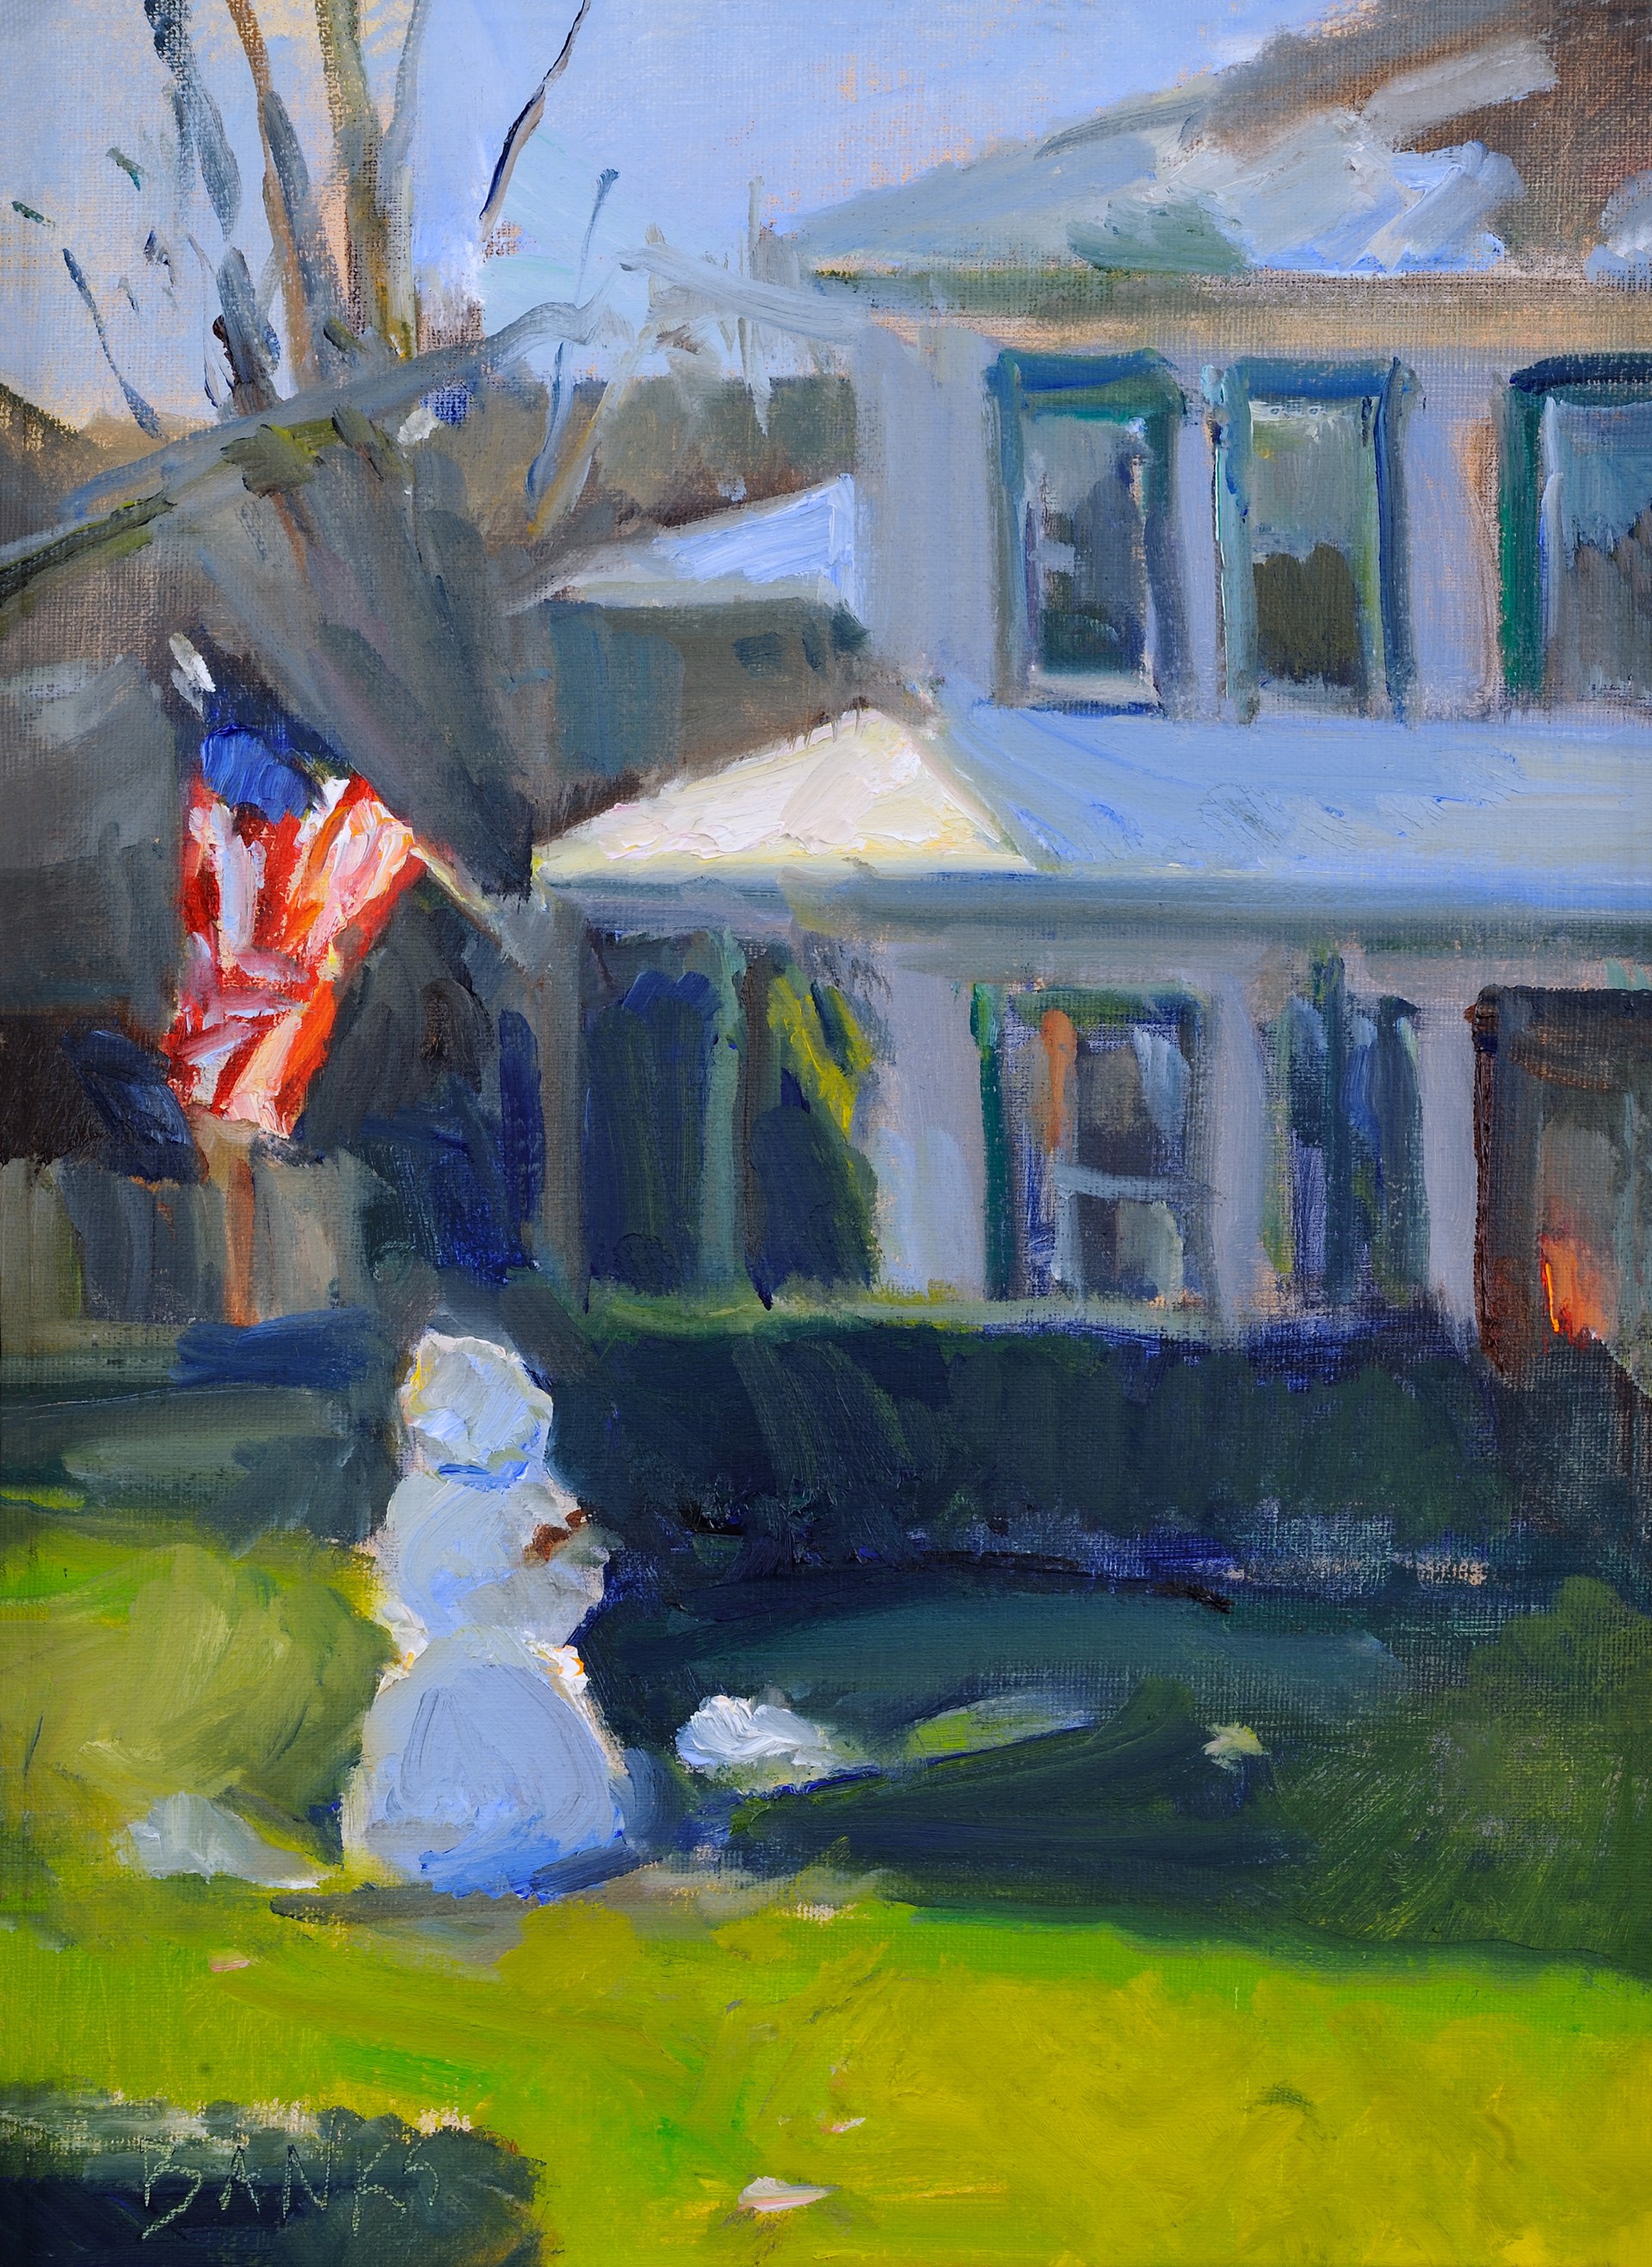 The Last Snowman by Jill Banks